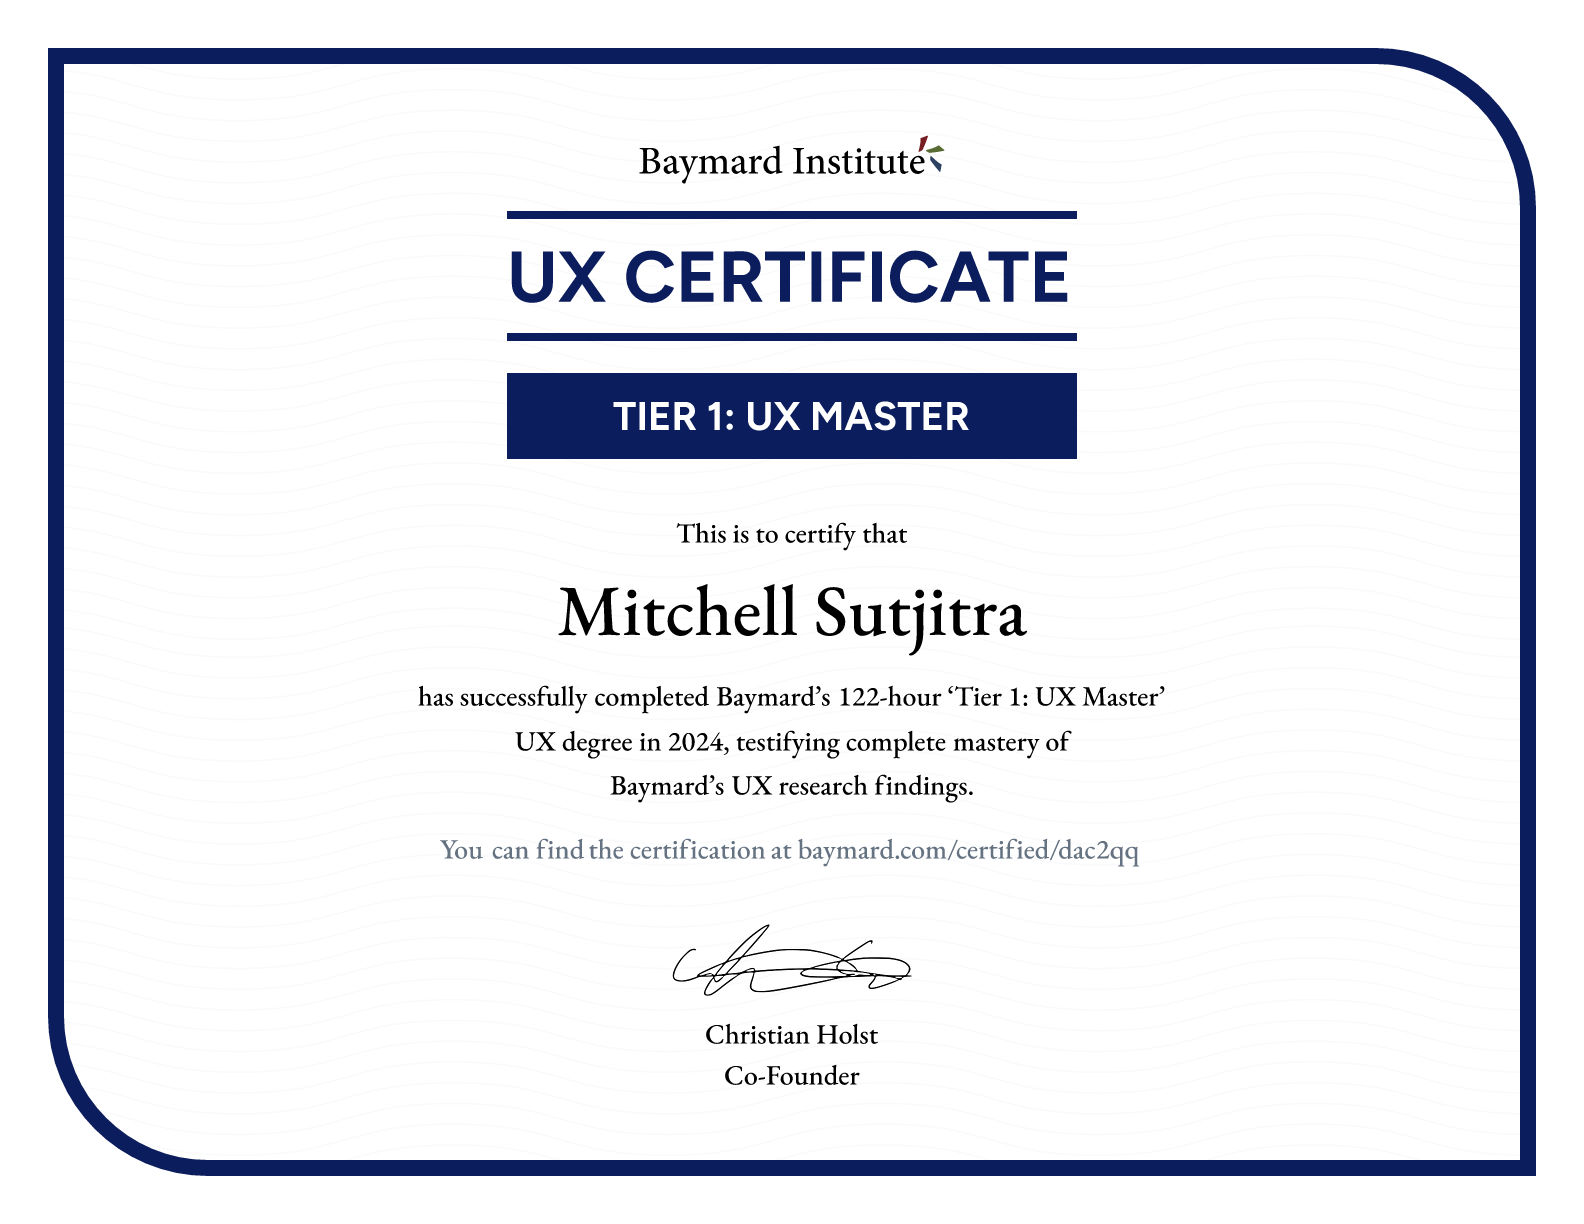 Mitchell Sutjitra’s certificate